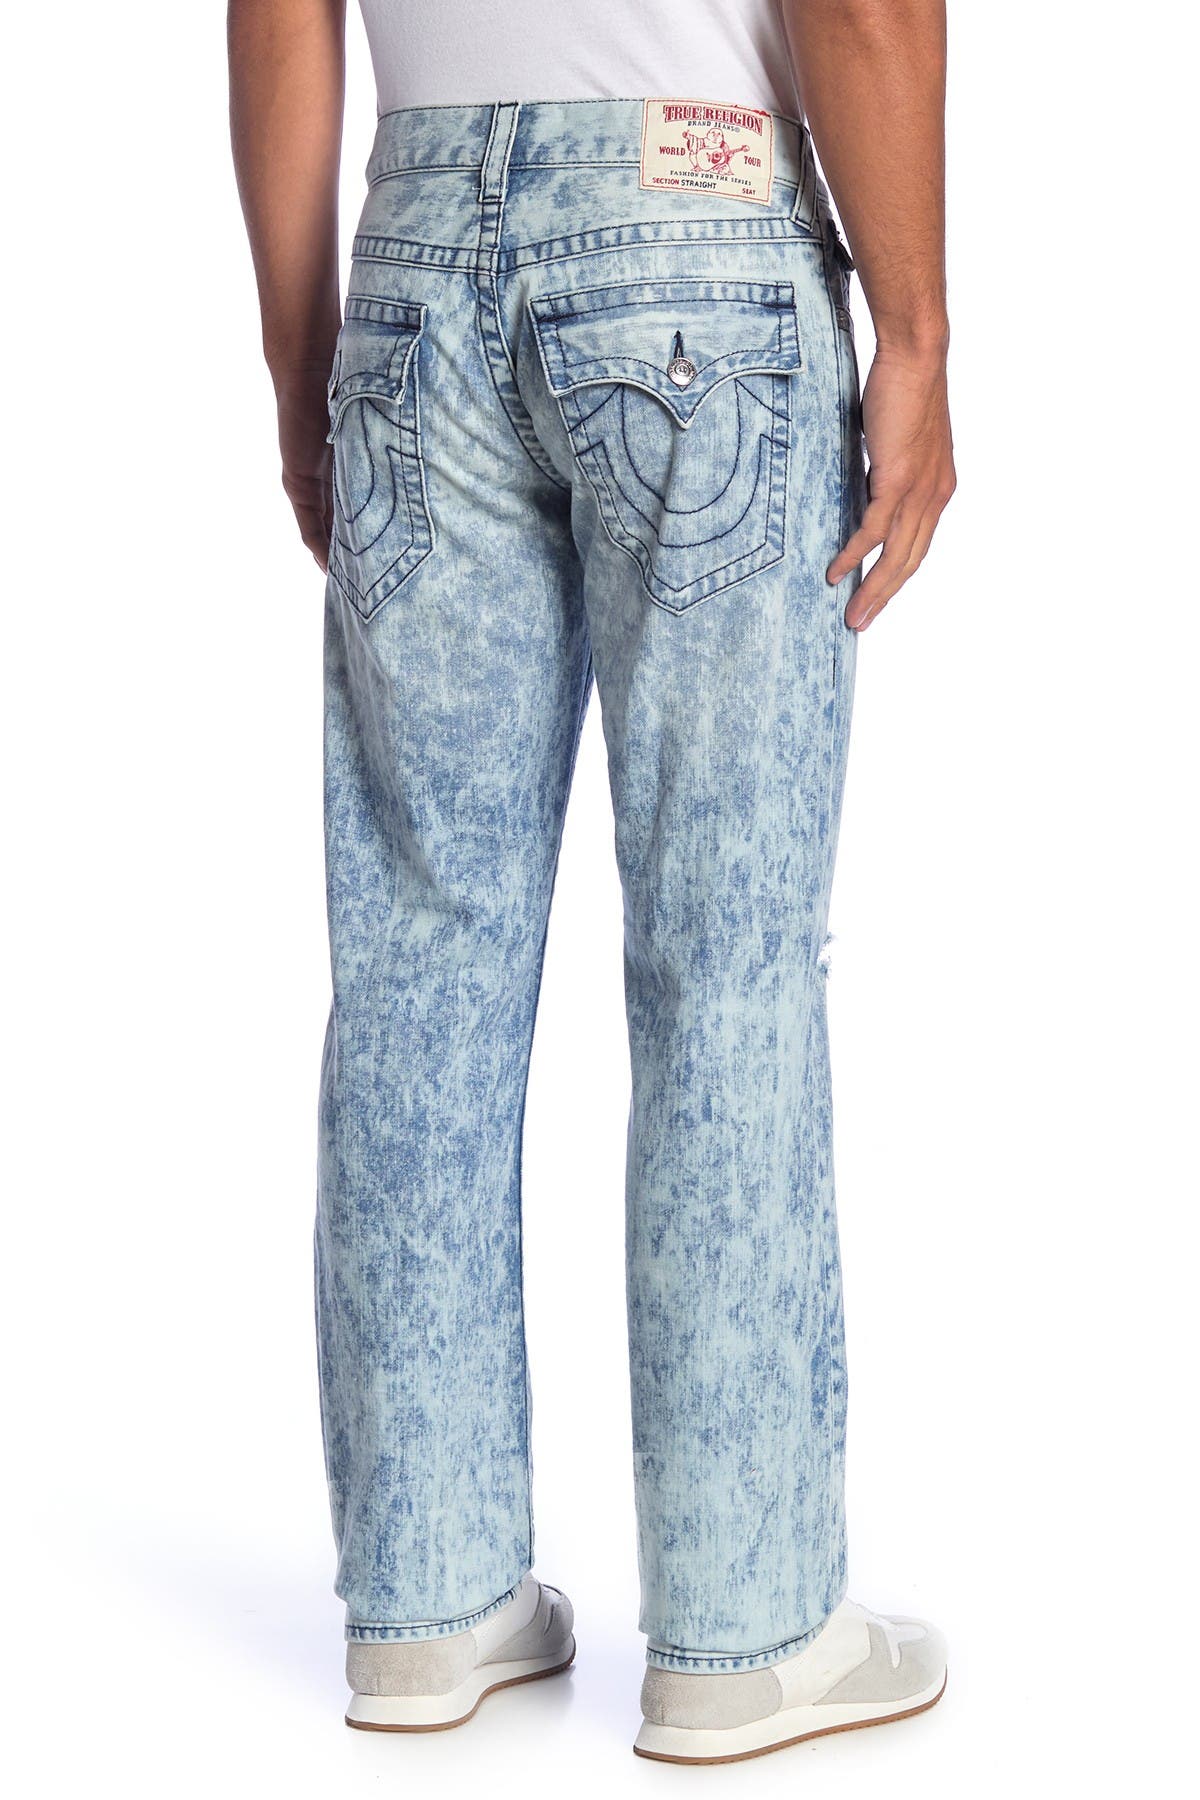 nordstrom rack true religion jeans